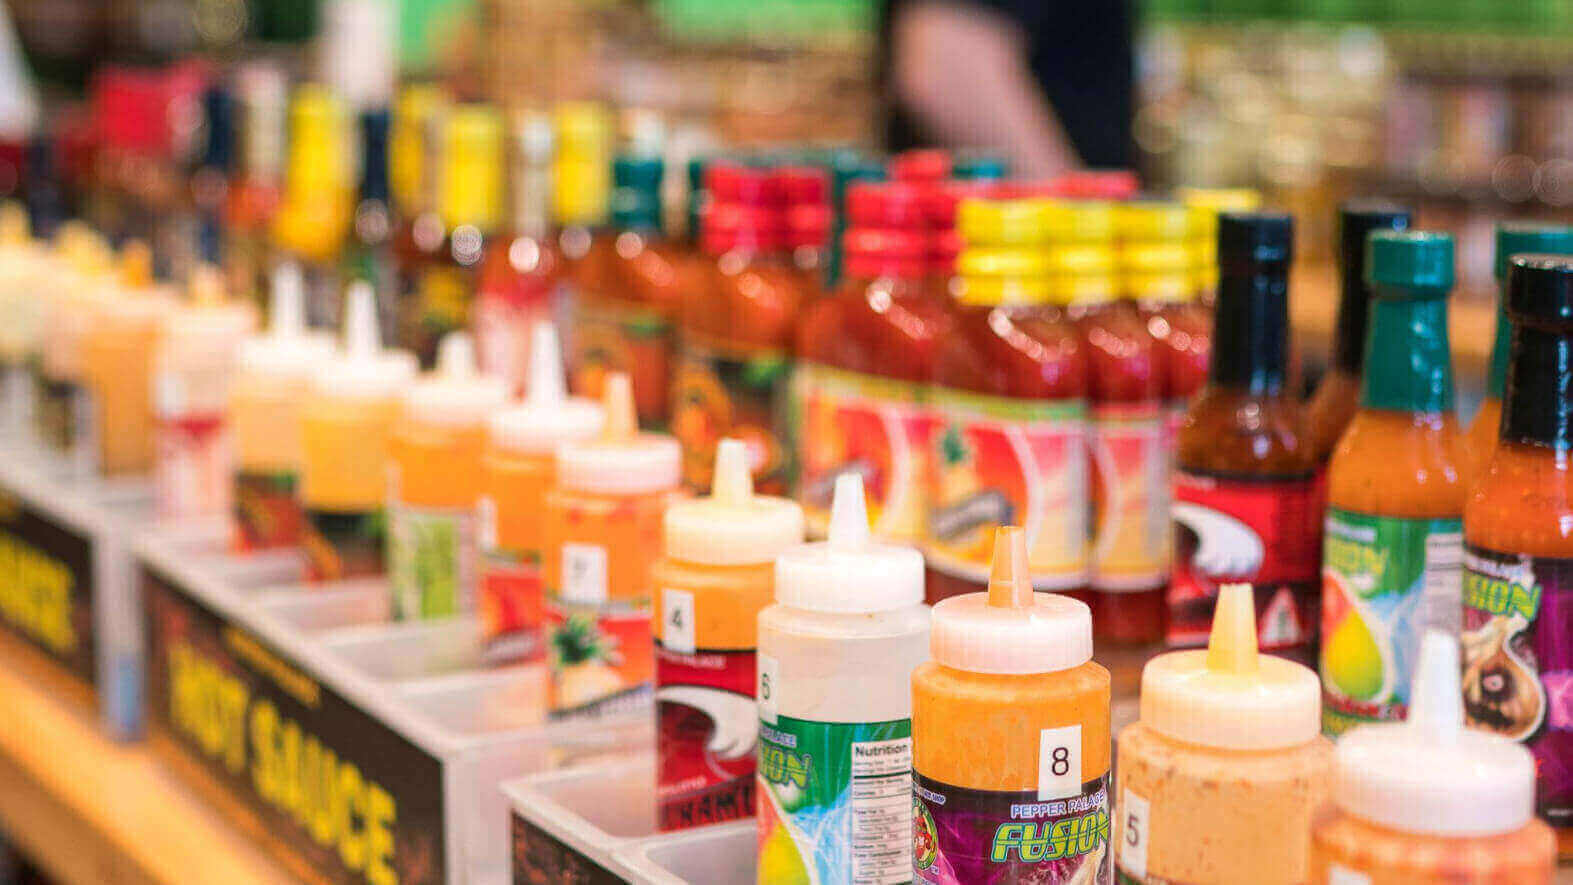 image showing bottles of hot sauce